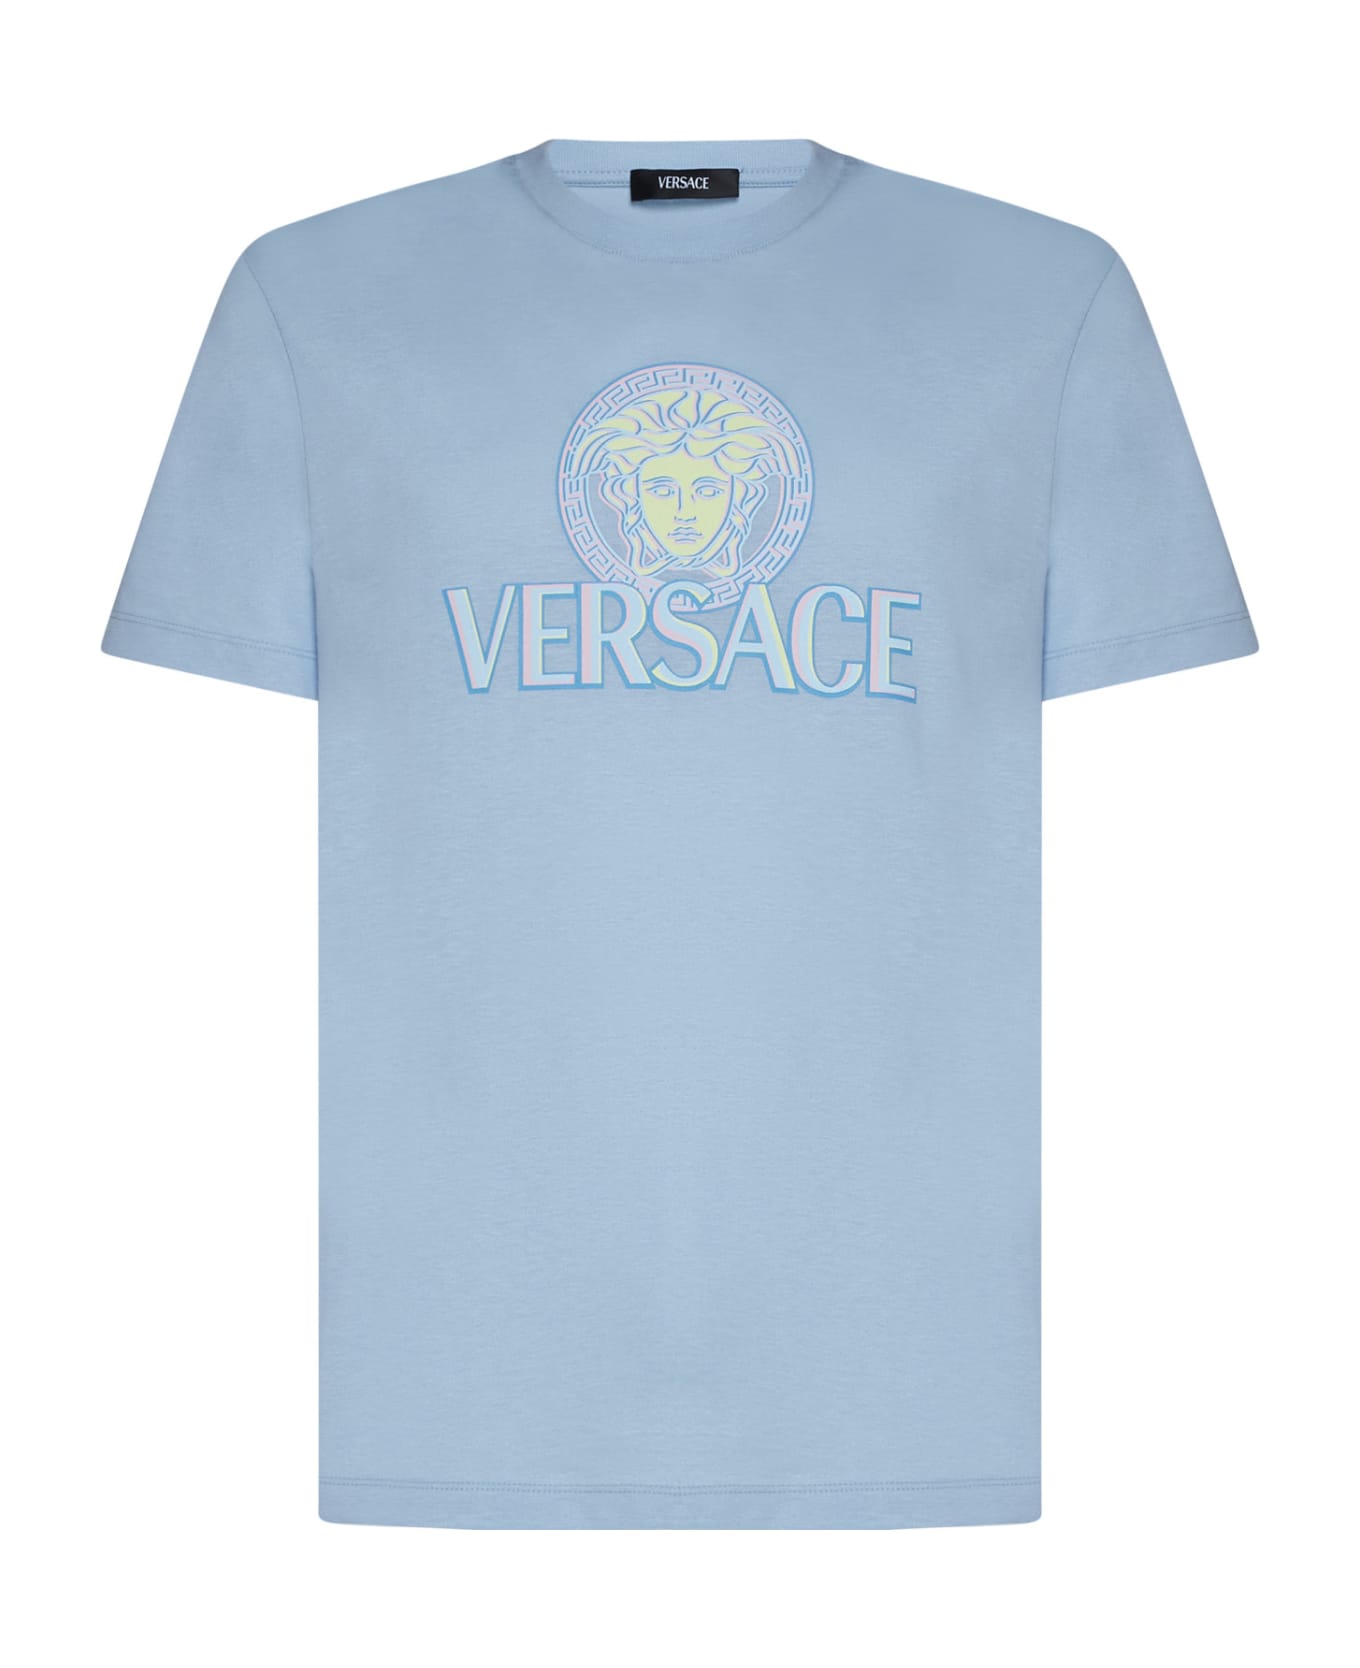 Versace T-Shirt - Pastel blue + stampa